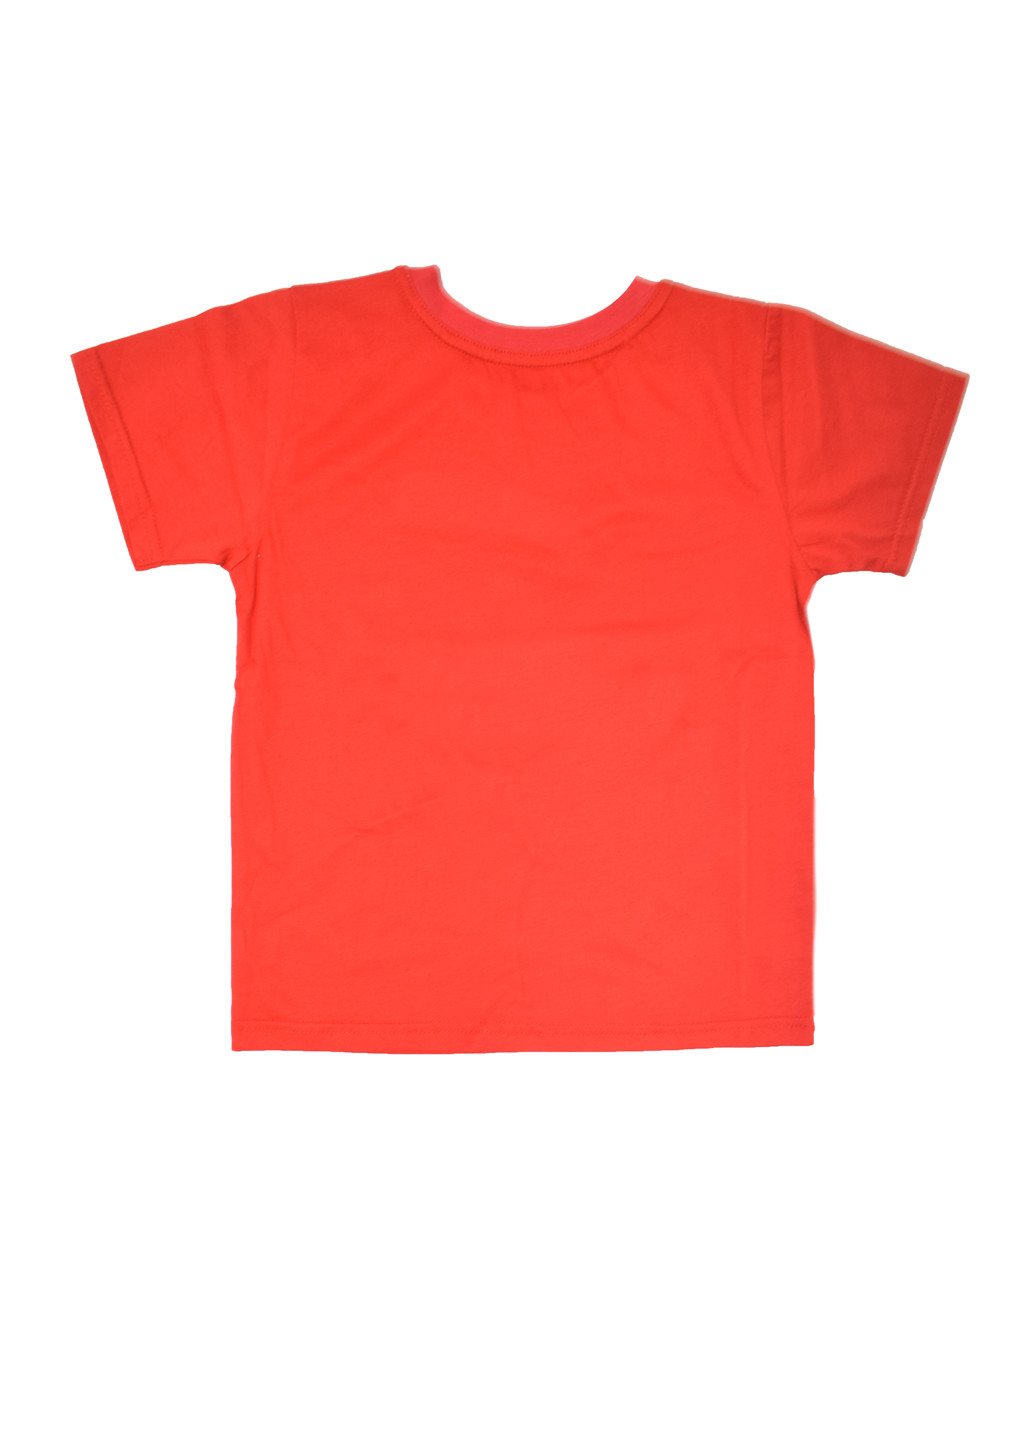 Оранжево-красная летняя футболка Фламинго